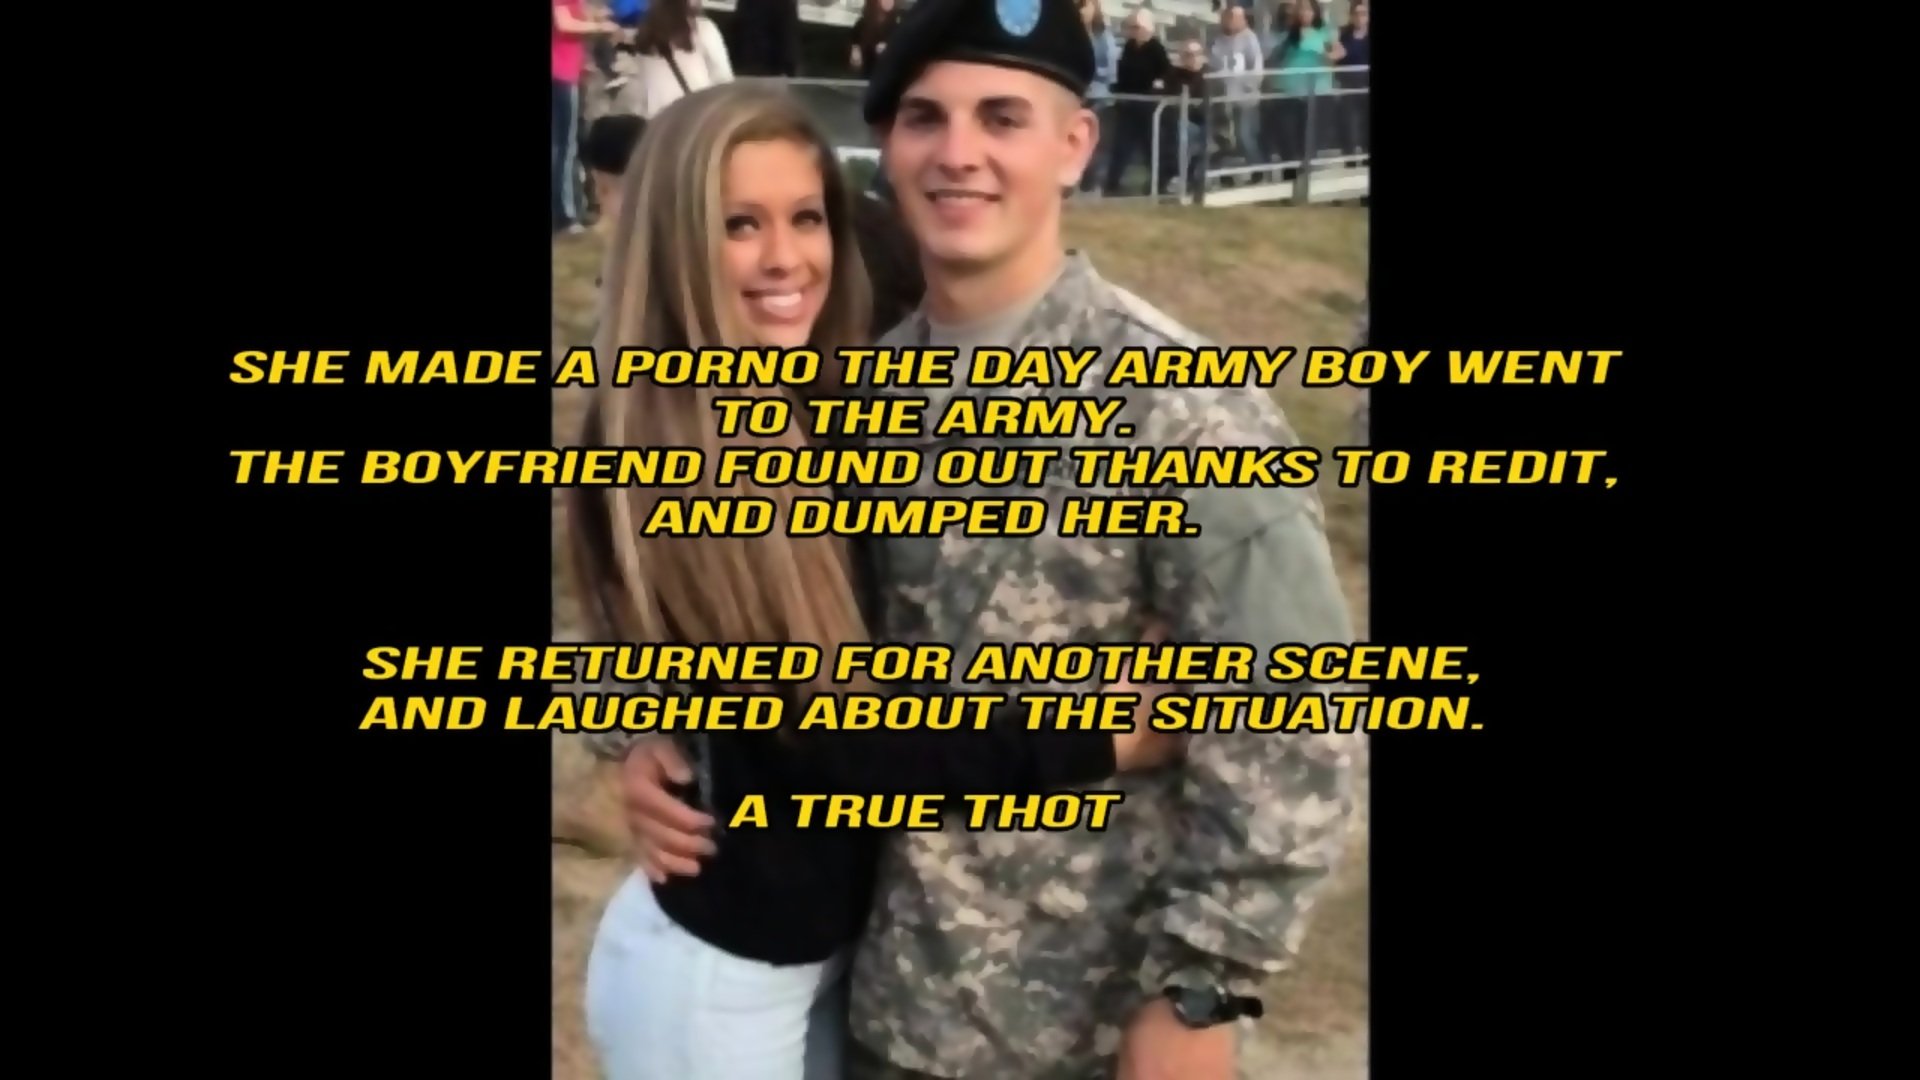 Military cheating